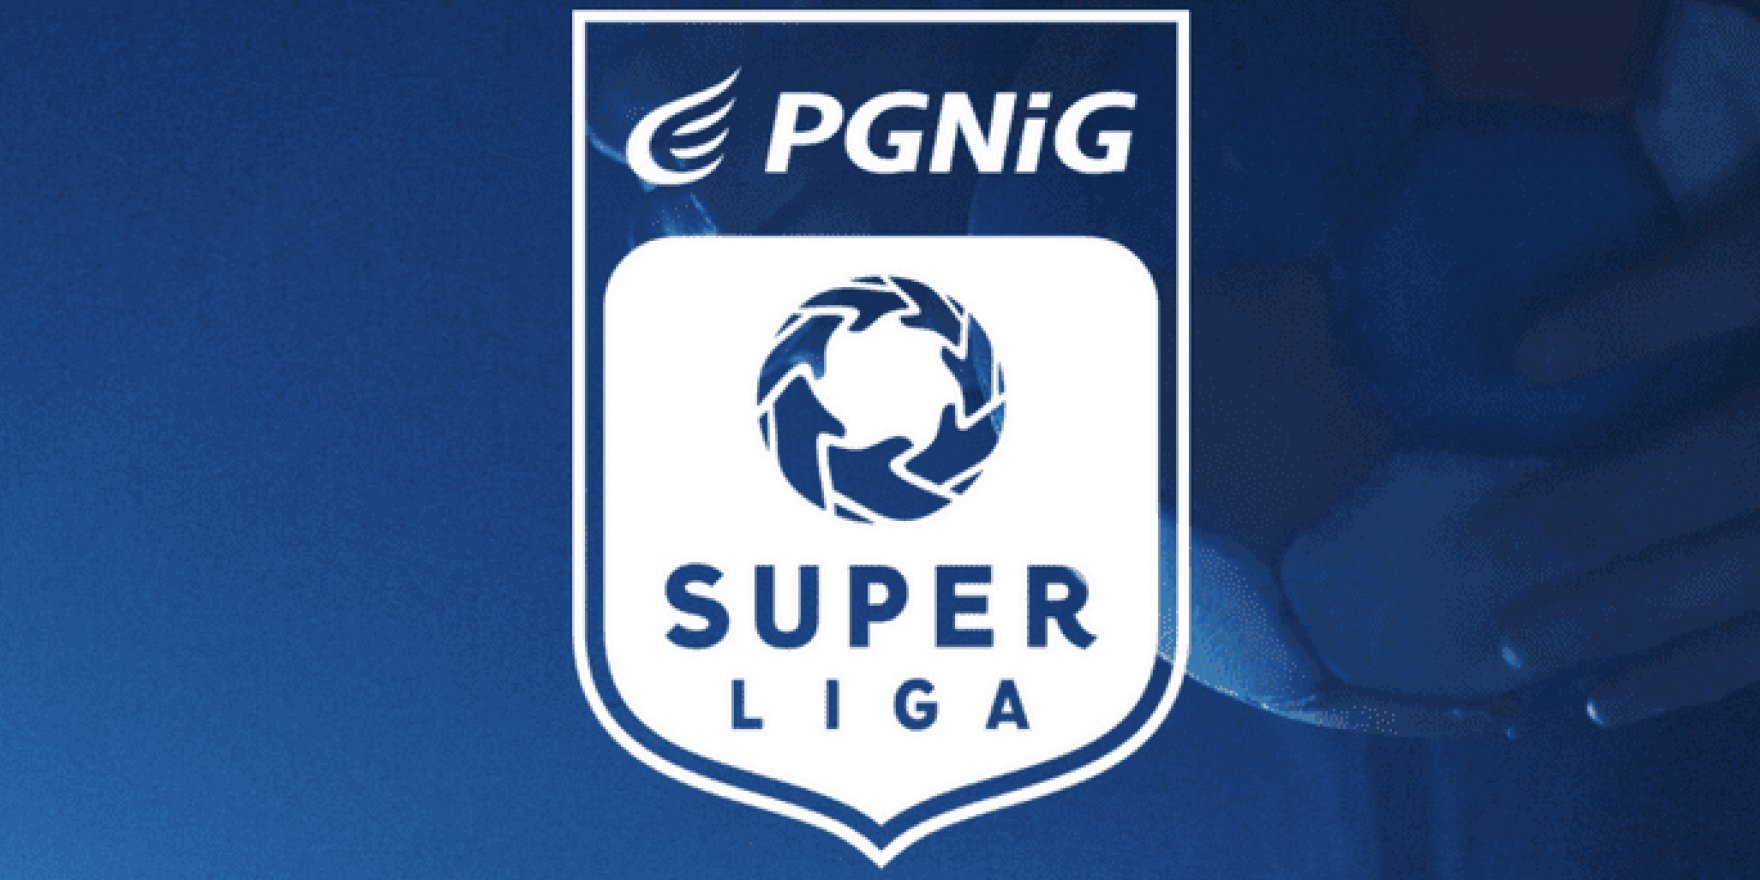 PGNiG Superliga z 8-krotnym wzrostem oglądalności!